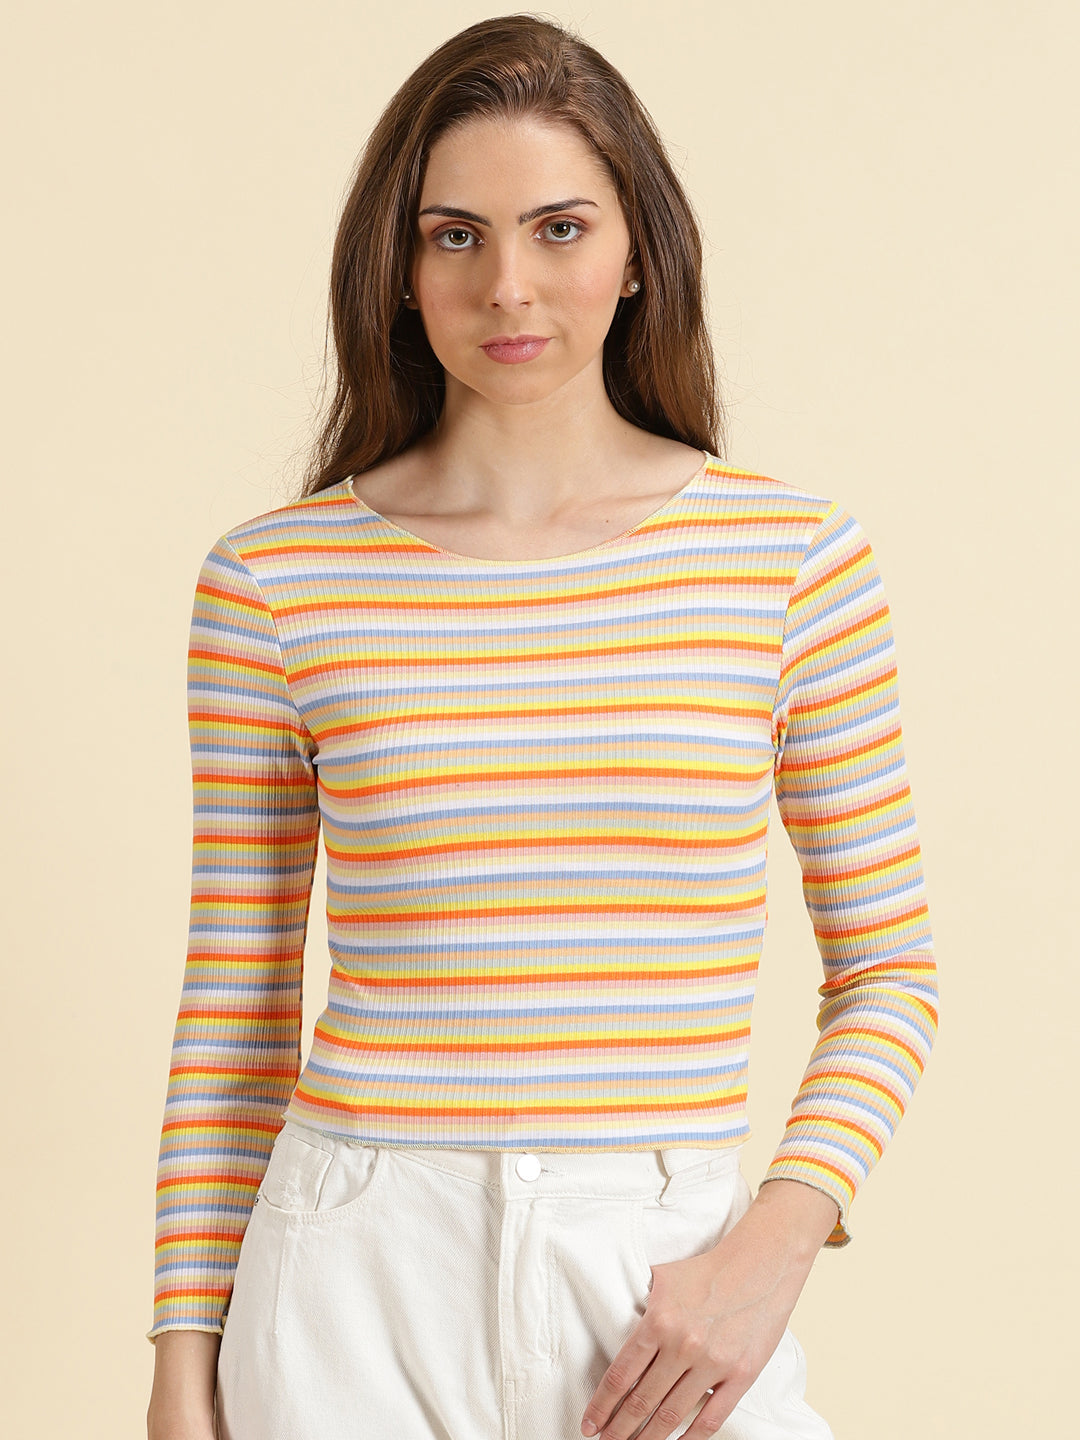 Women's Orange Striped Fitted Crop Top